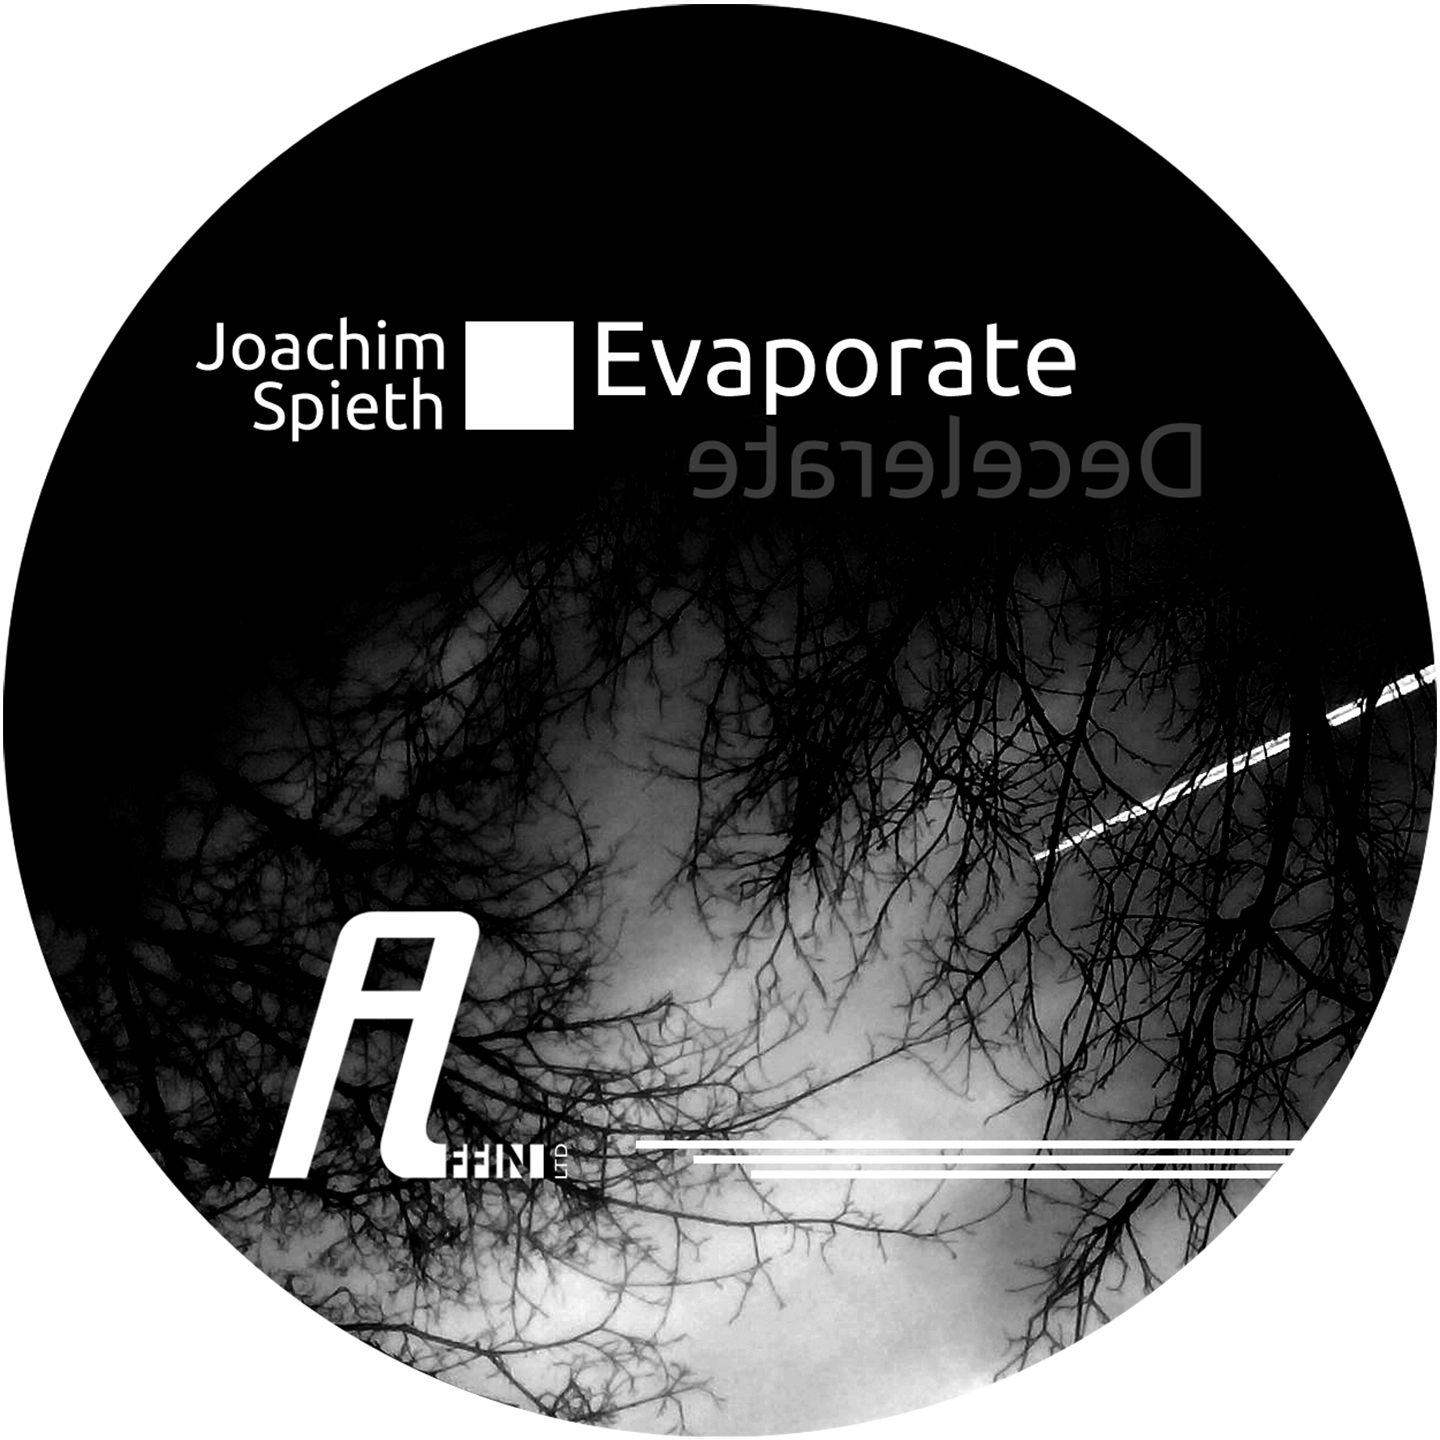 affin032-ltd-joachim-spieth-evaporate-side-a_kopie.jpg